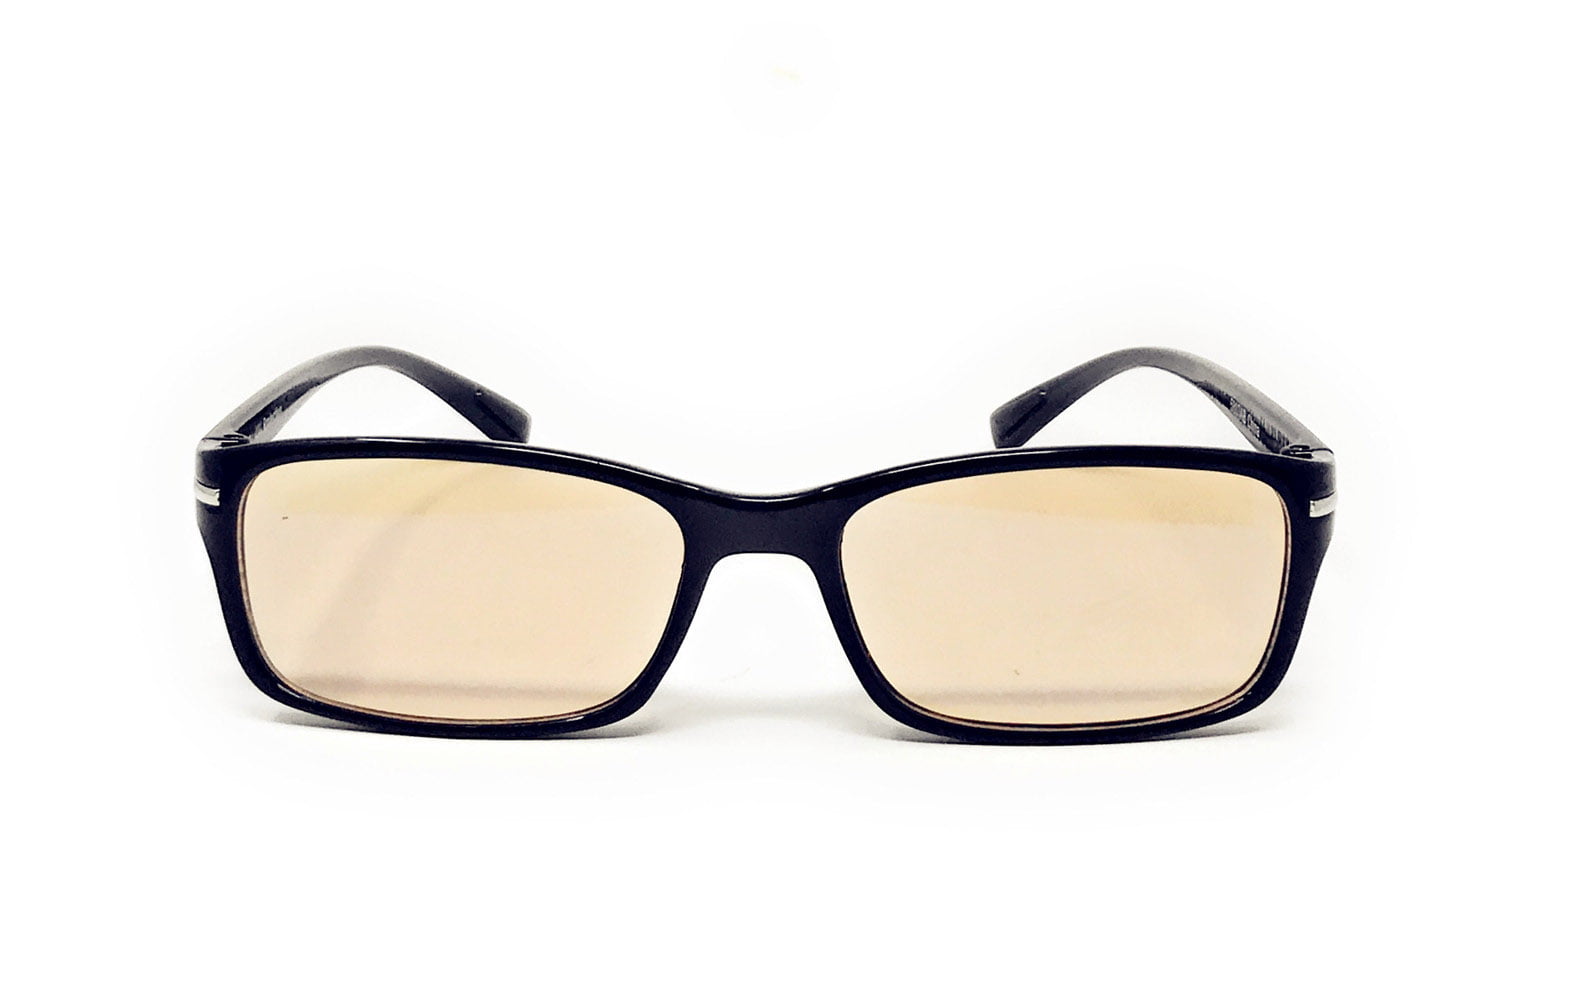 Eyekepper Vintage Computer Reading Glasses Readers-Anti-Reflective,Anti-Glare,Clear Lens,Uv Protection Men Women 